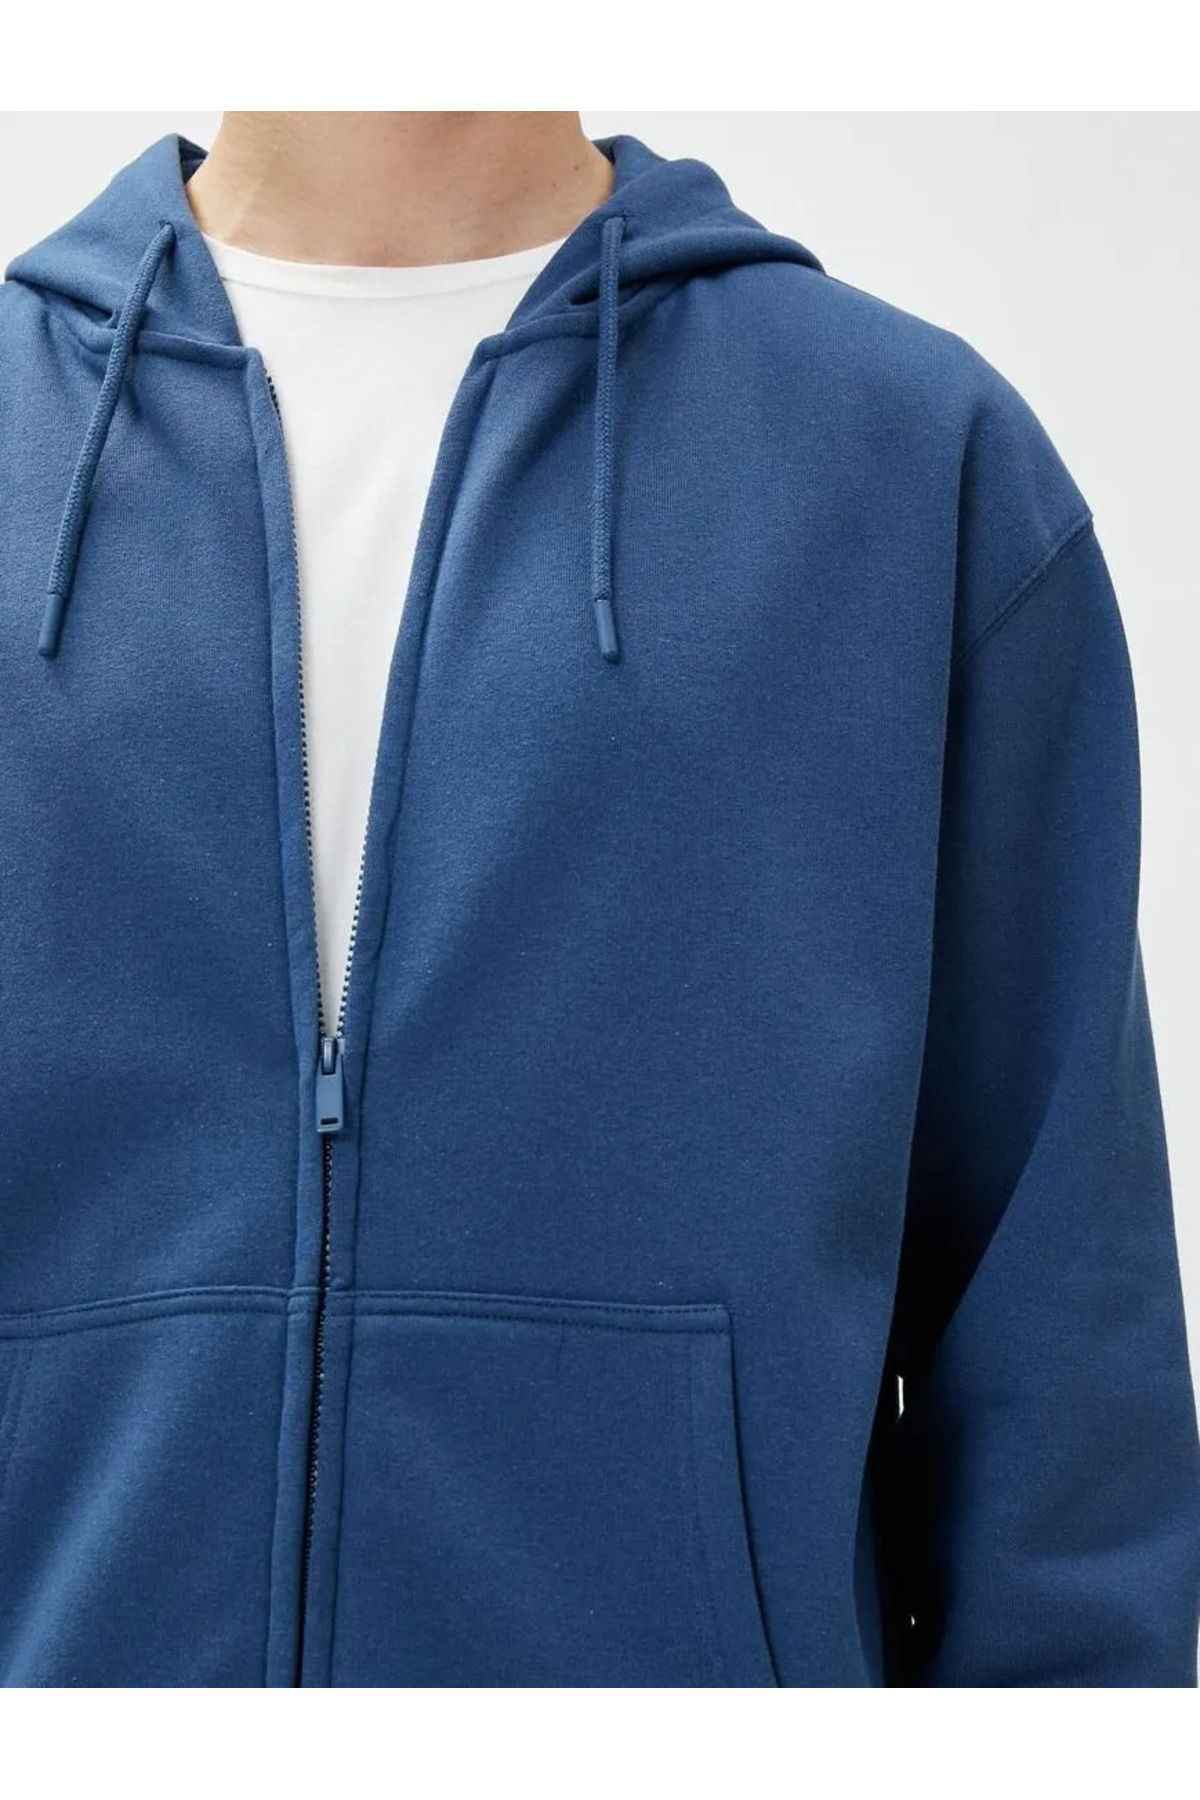 سویشرت زیپ دار جیب سرپوش دار لیبل با جزئیات چاپ شده است